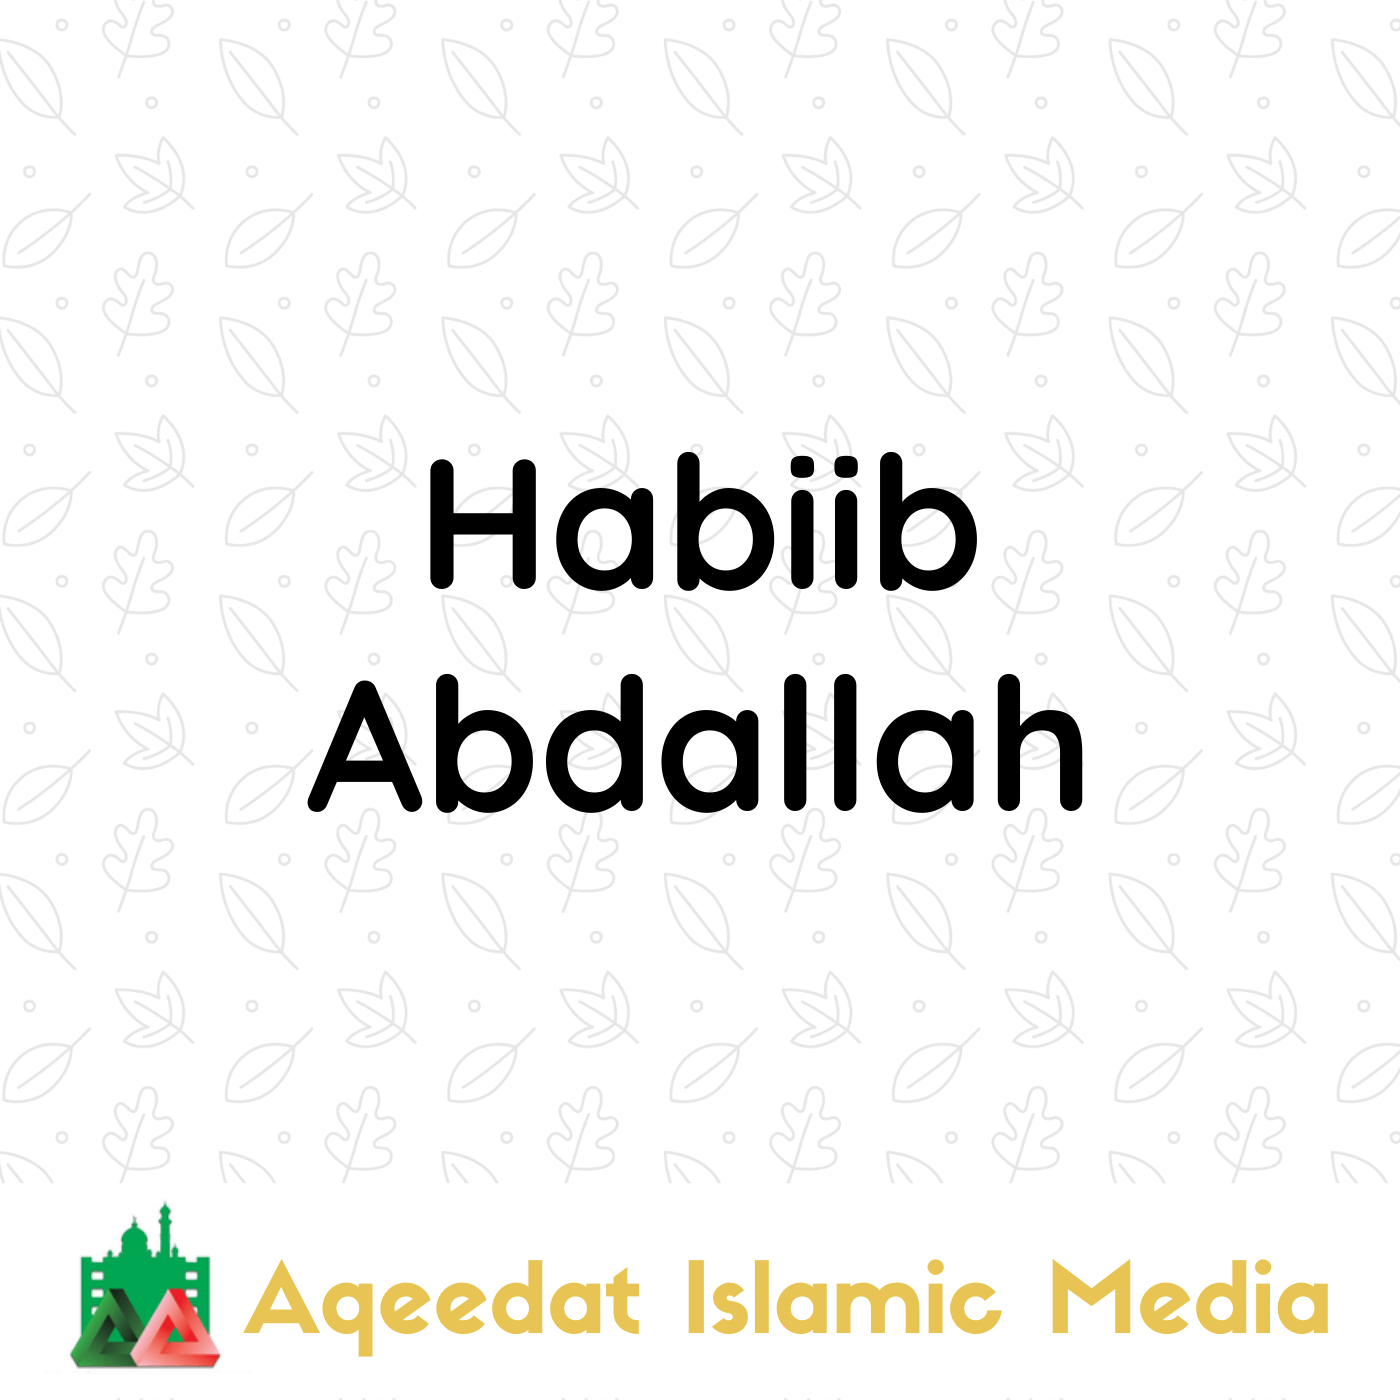  Habiib Abdallah